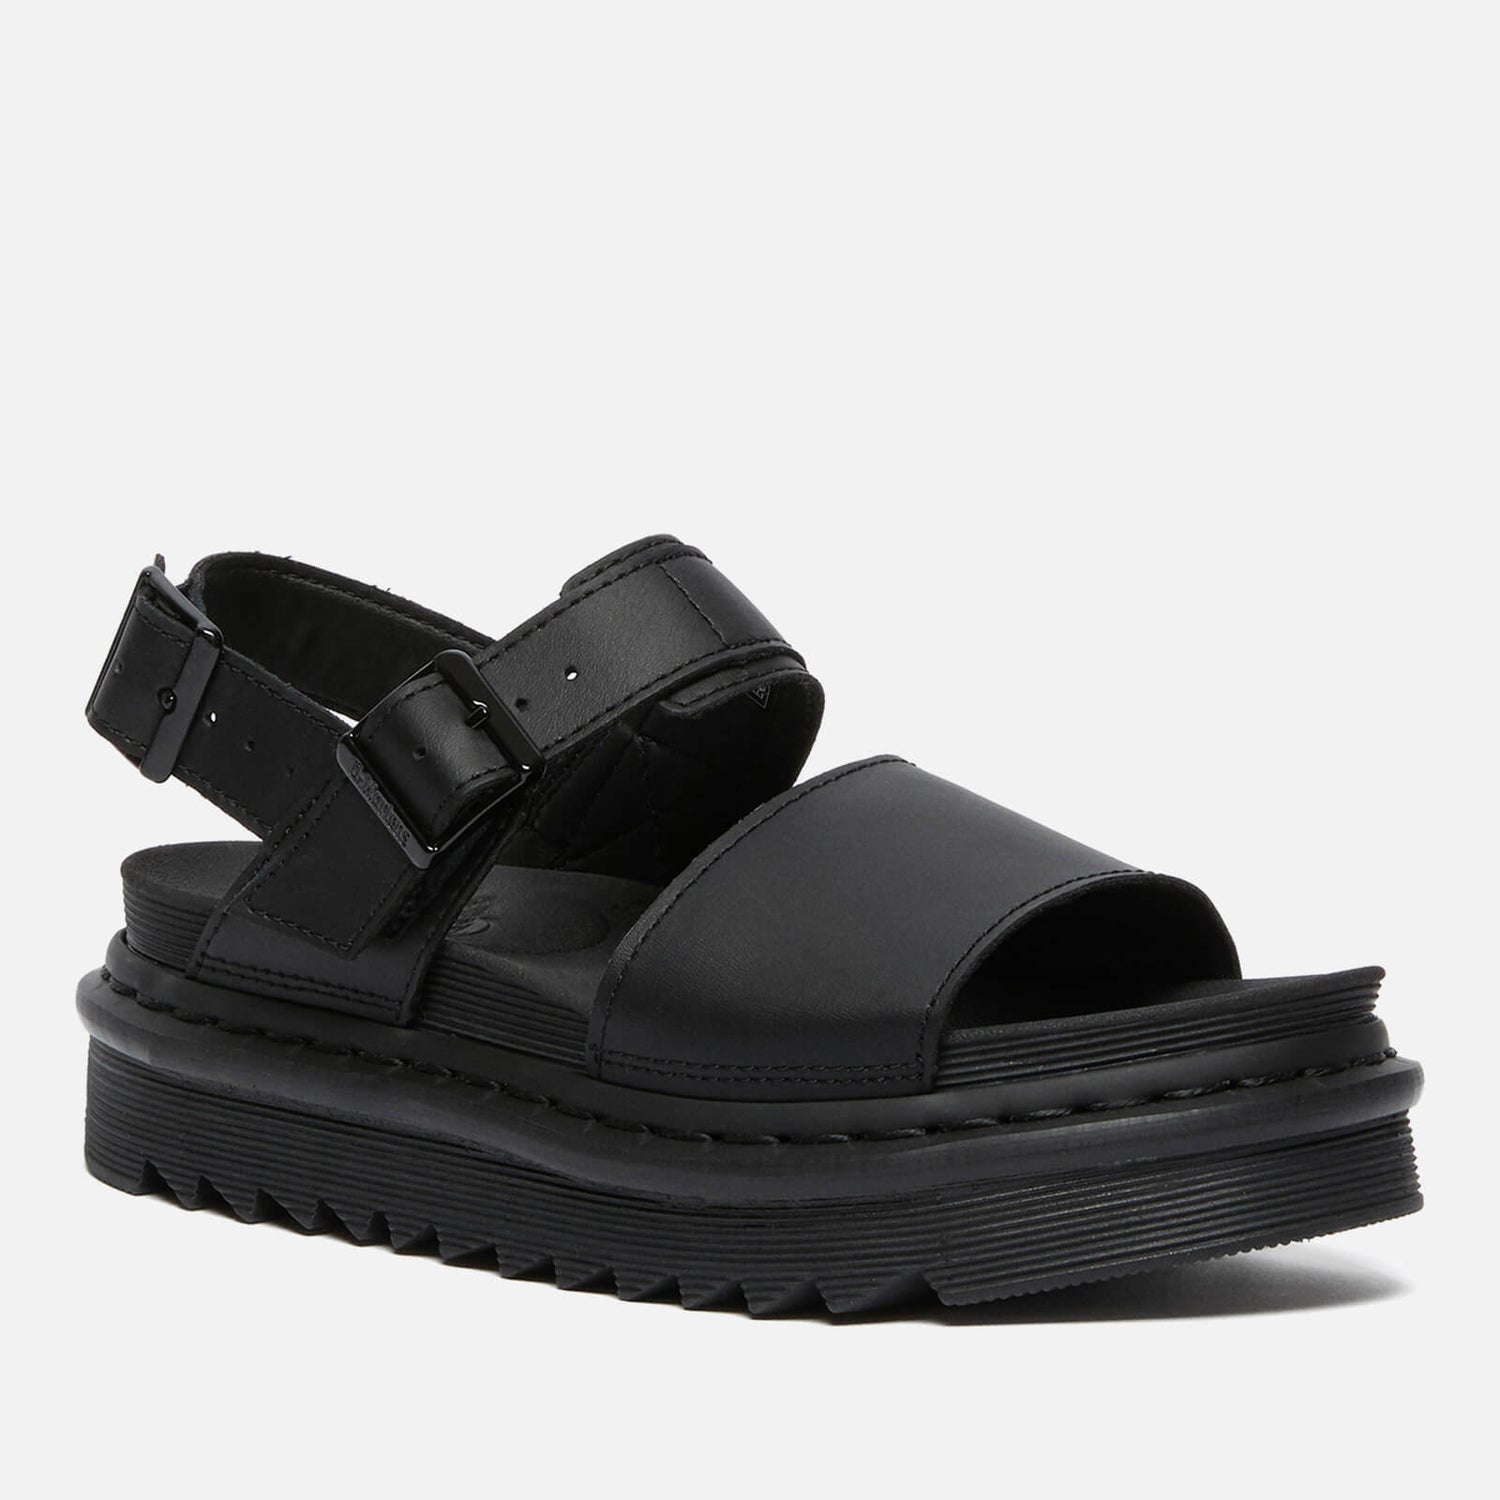 Dr. Martens Women's Voss Leather Strap Sandals - Black - UK 3